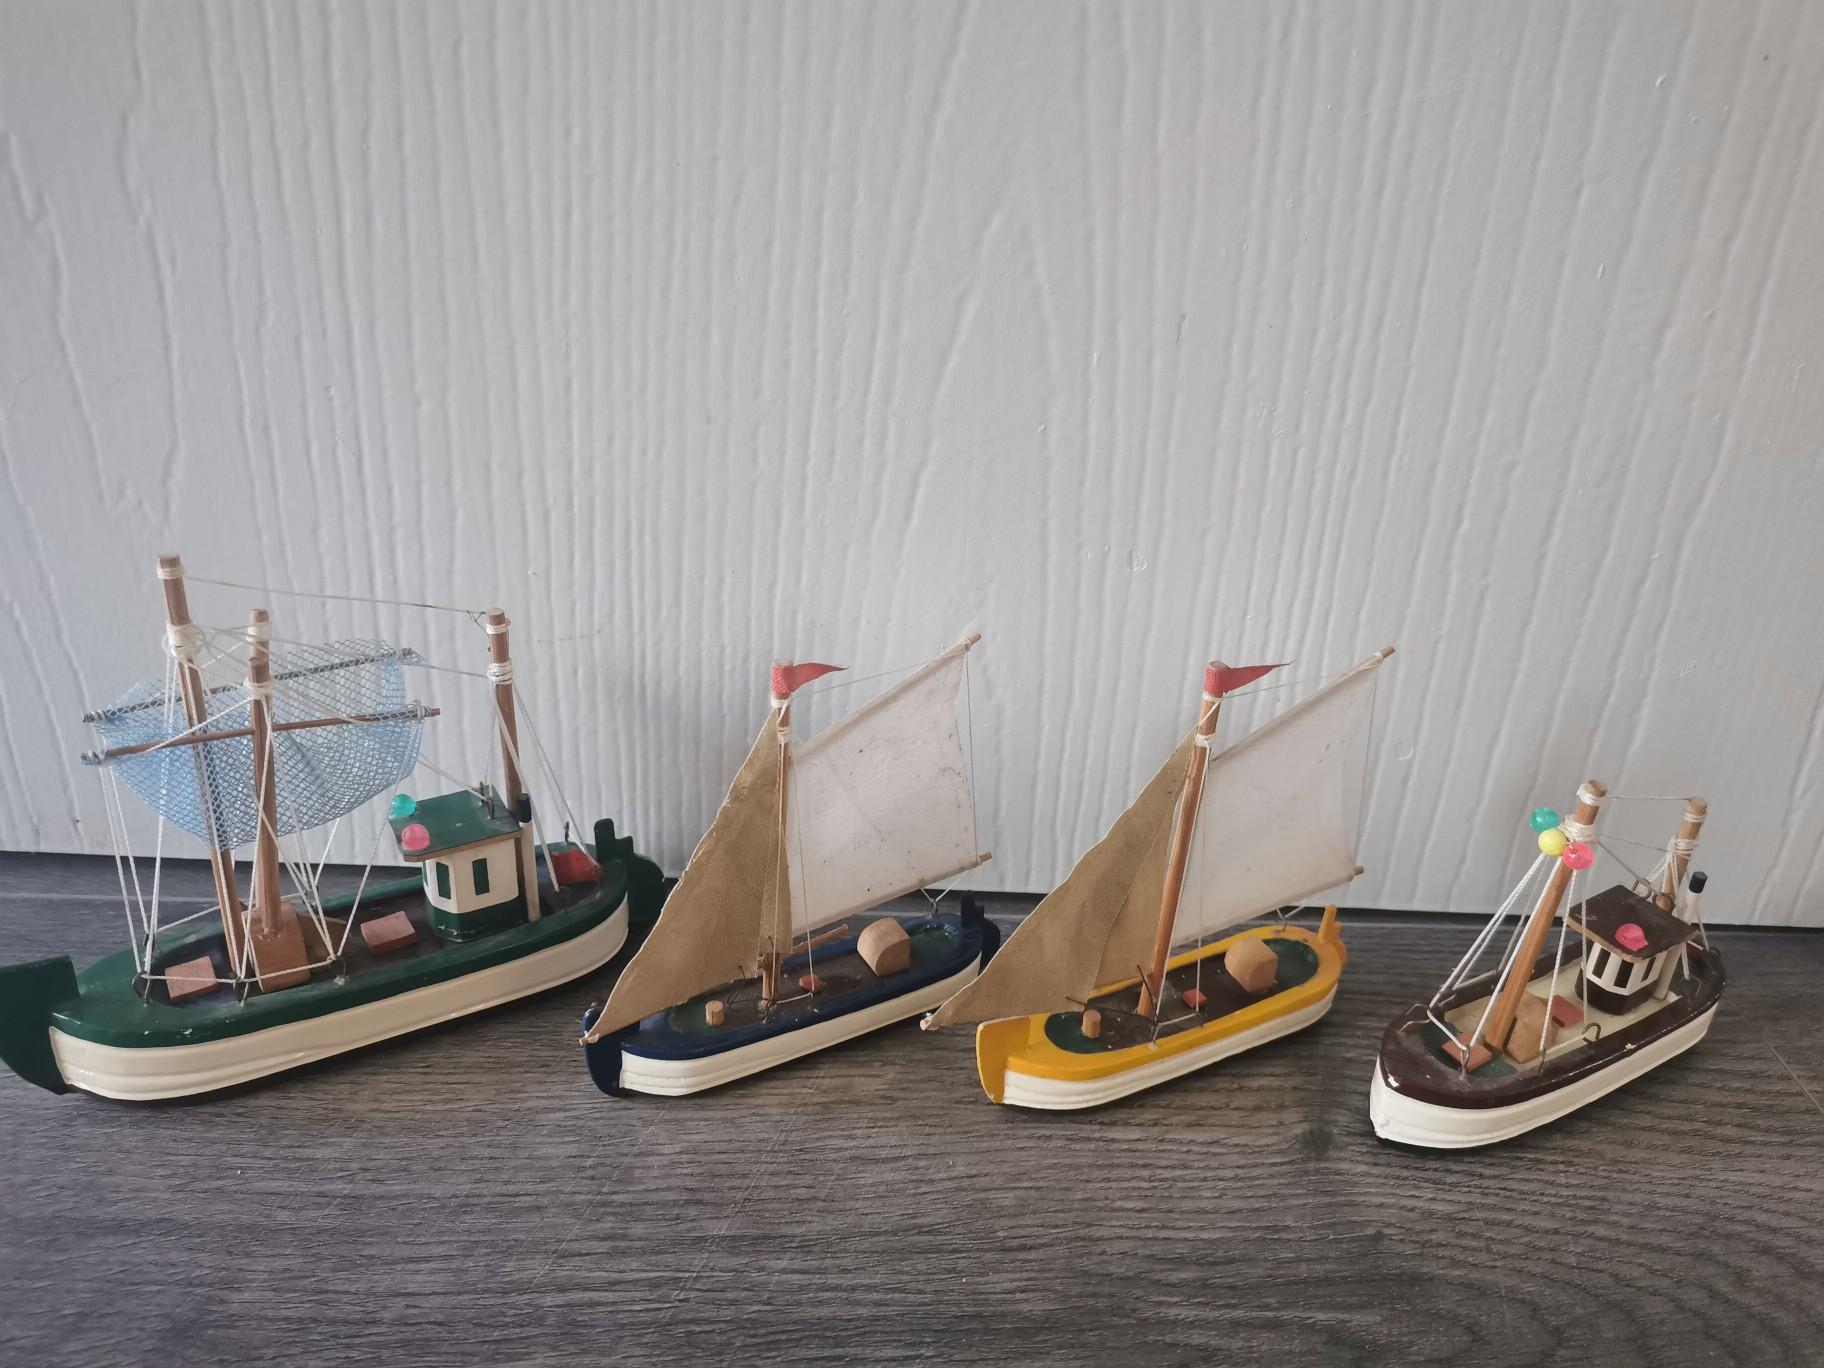 b'4x wooden boat models #1' for sale  